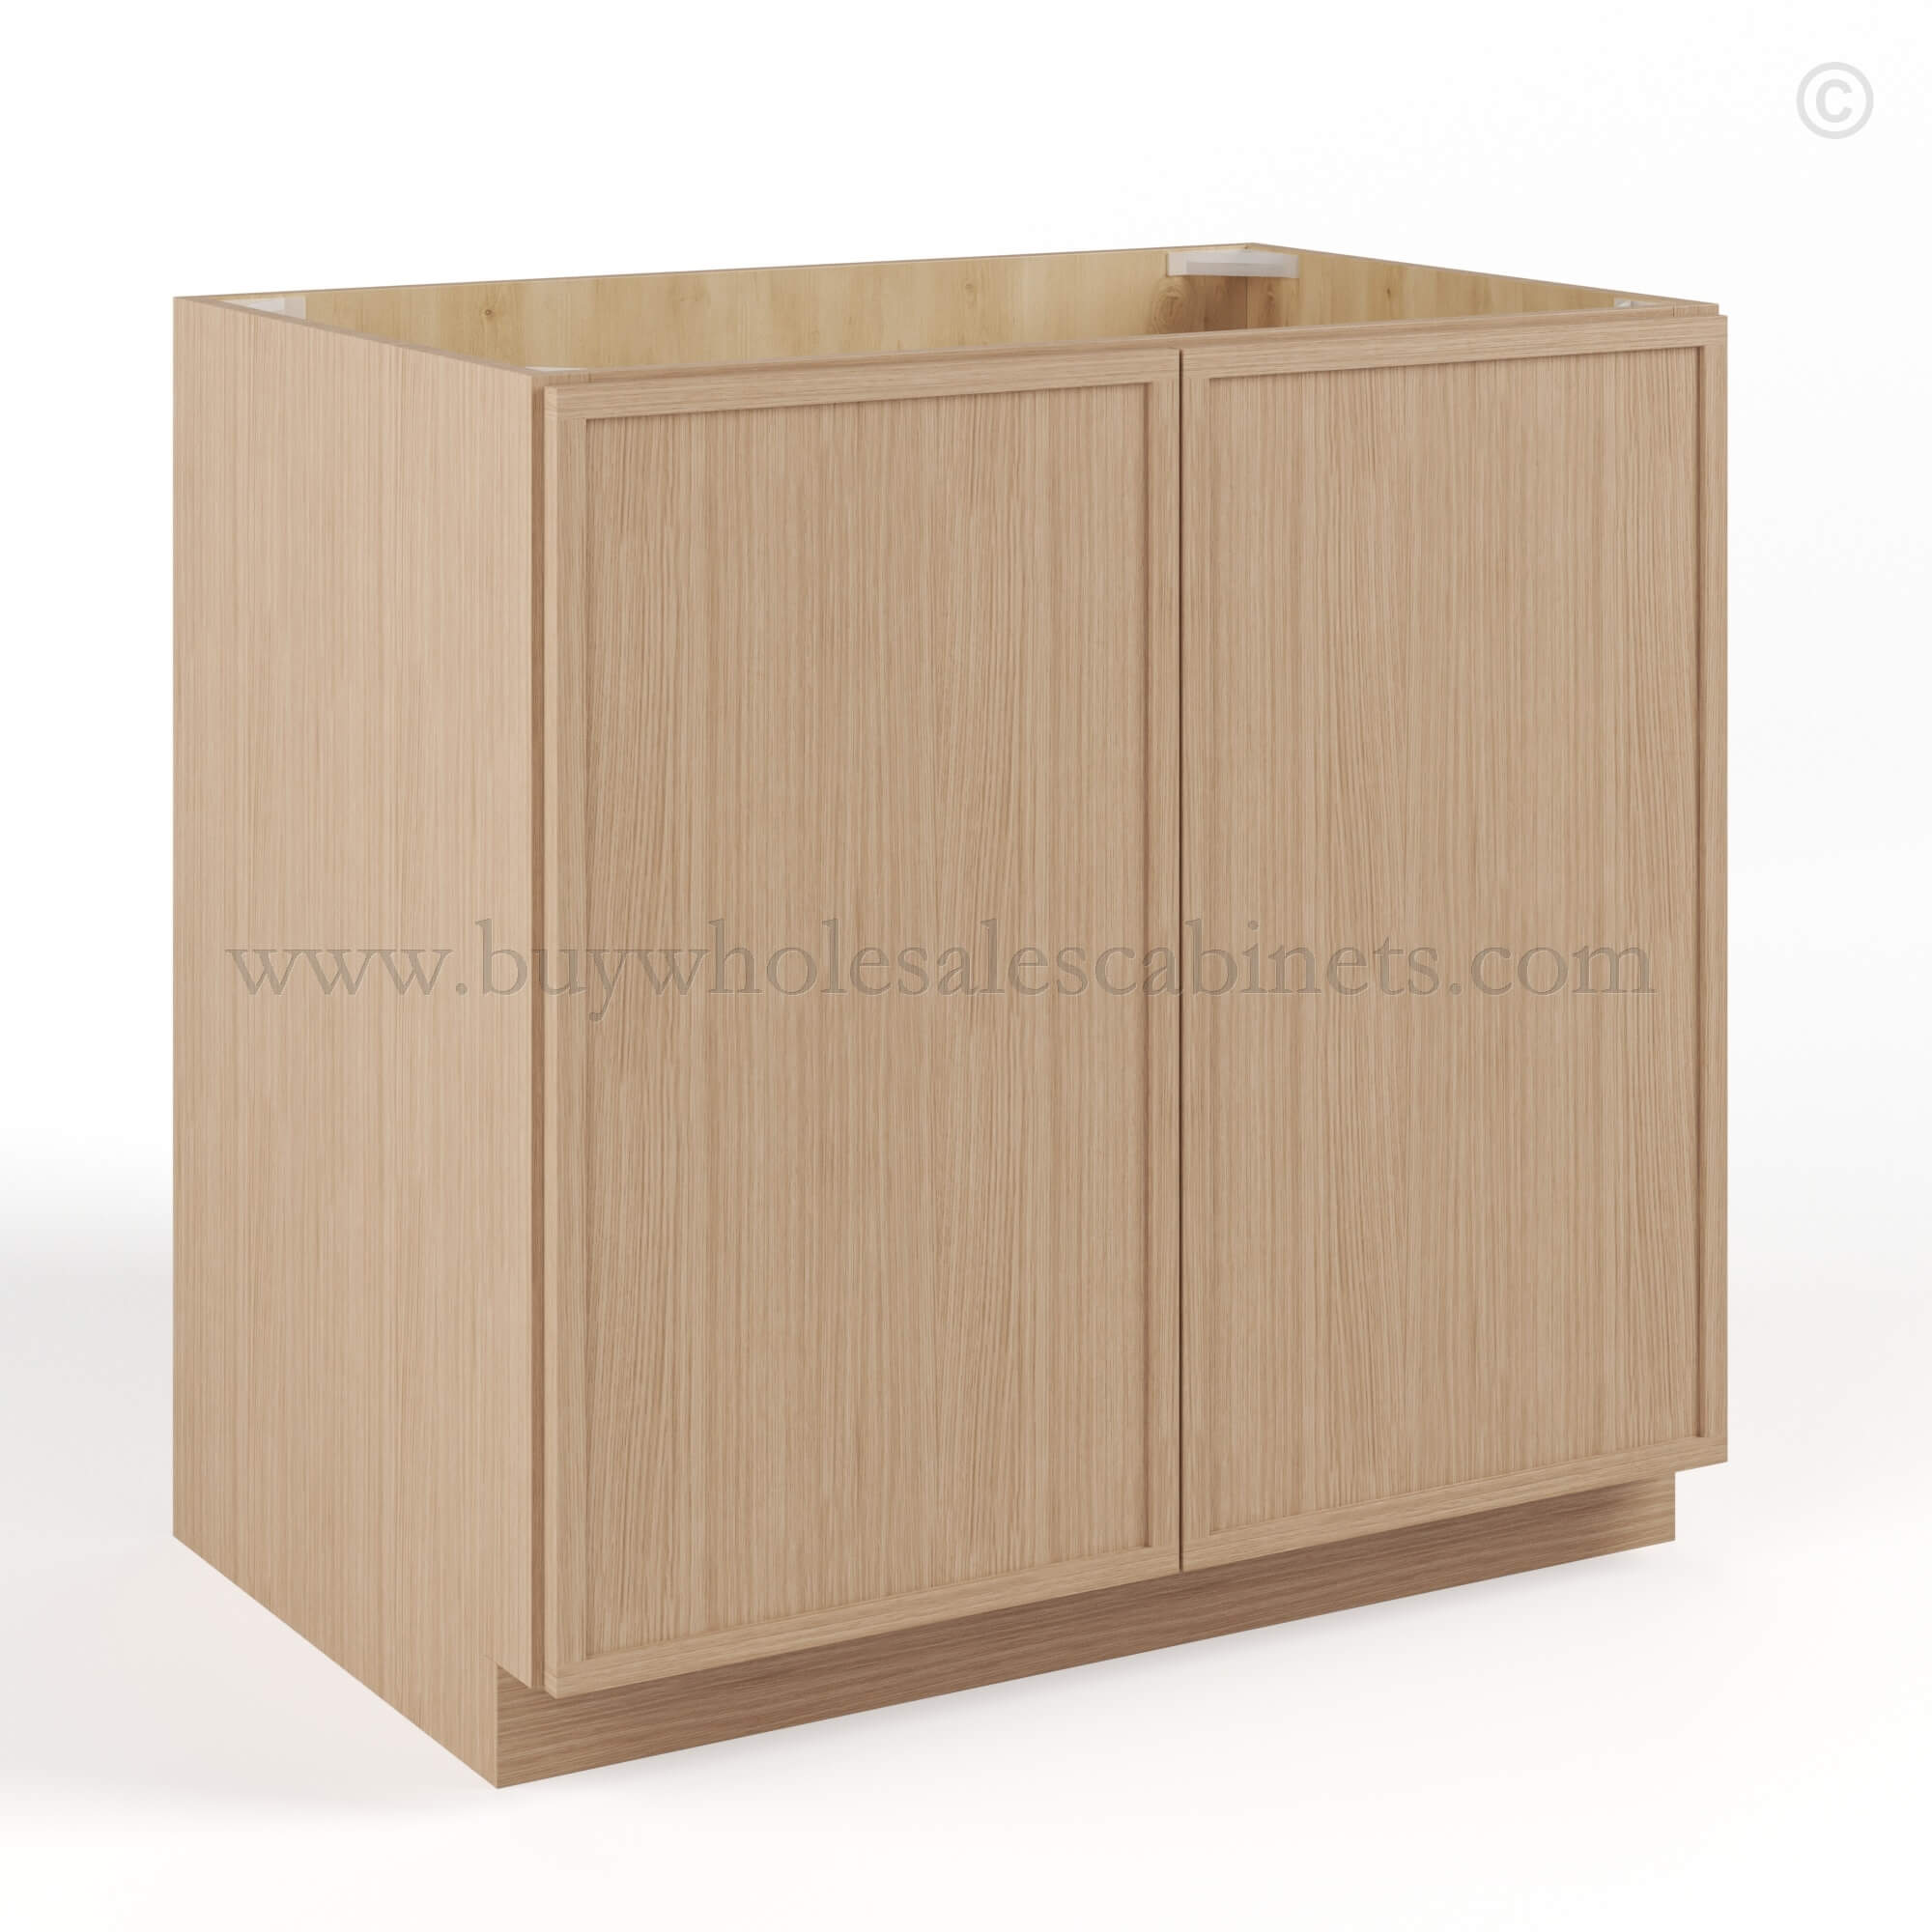 Slim Oak Shaker Base Cabinet Double Doors Full Height, rta cabinets, wholesale cabinets